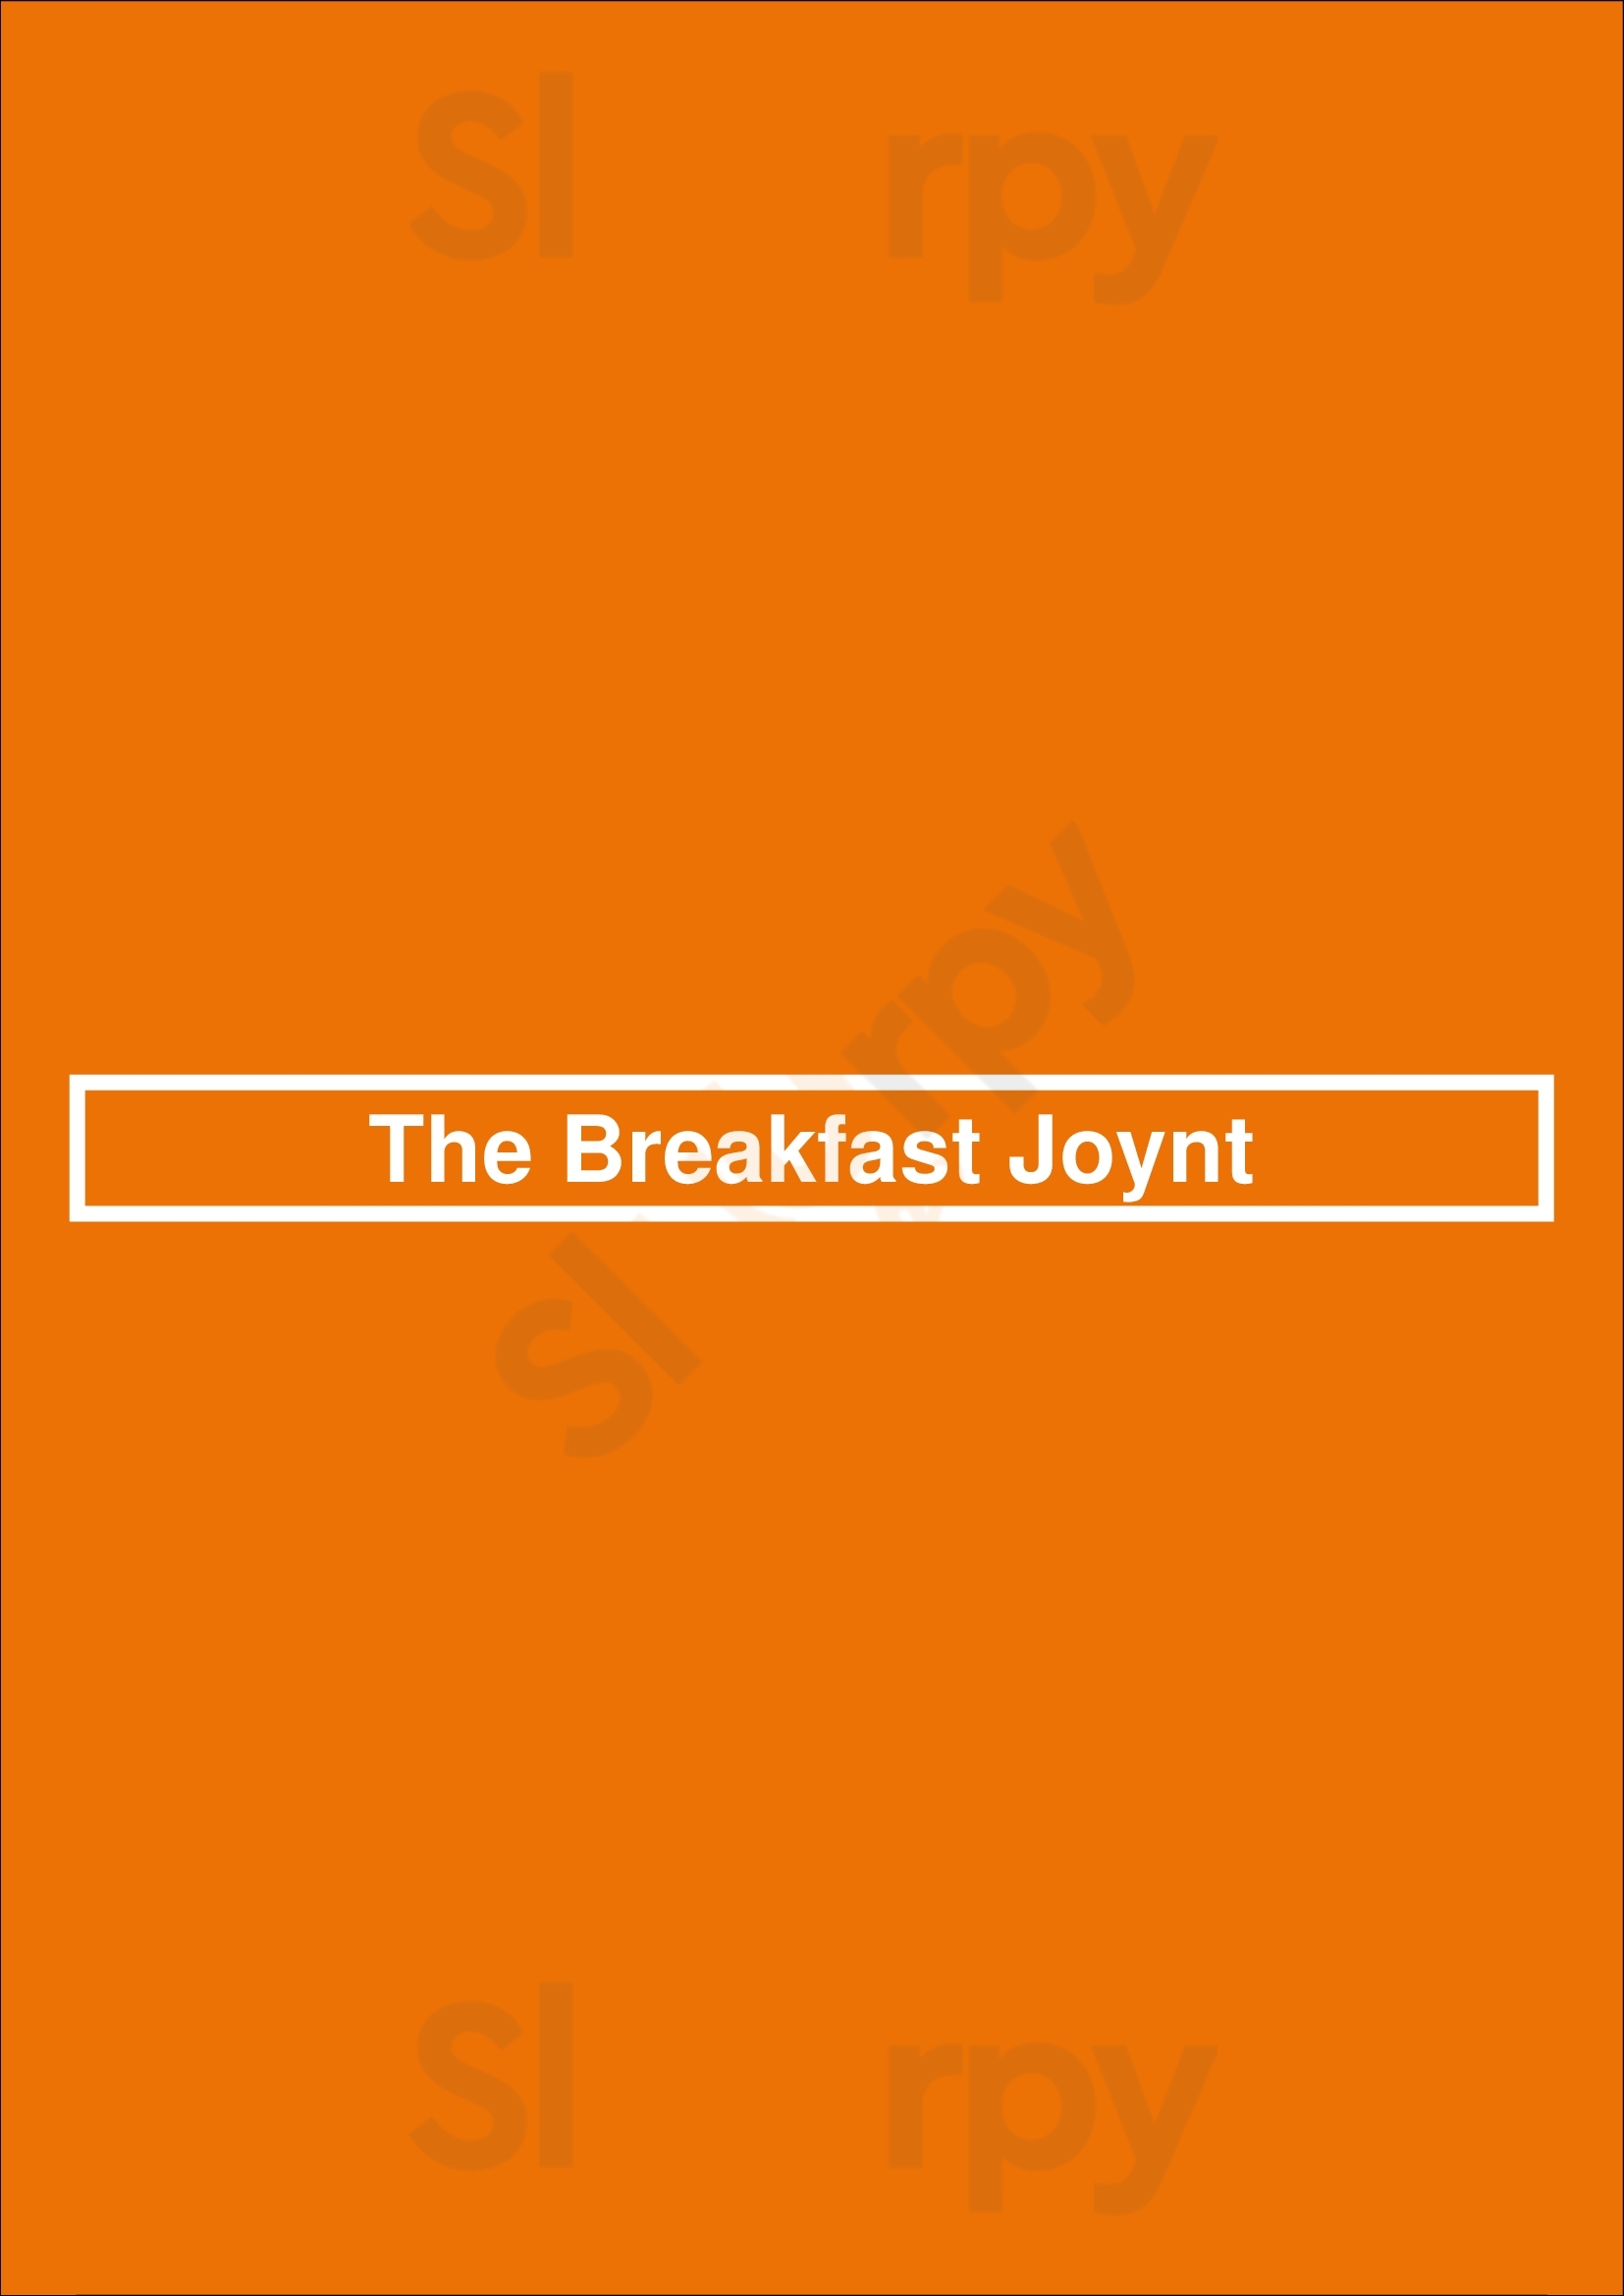 The Breakfast Joynt Scottsdale Menu - 1